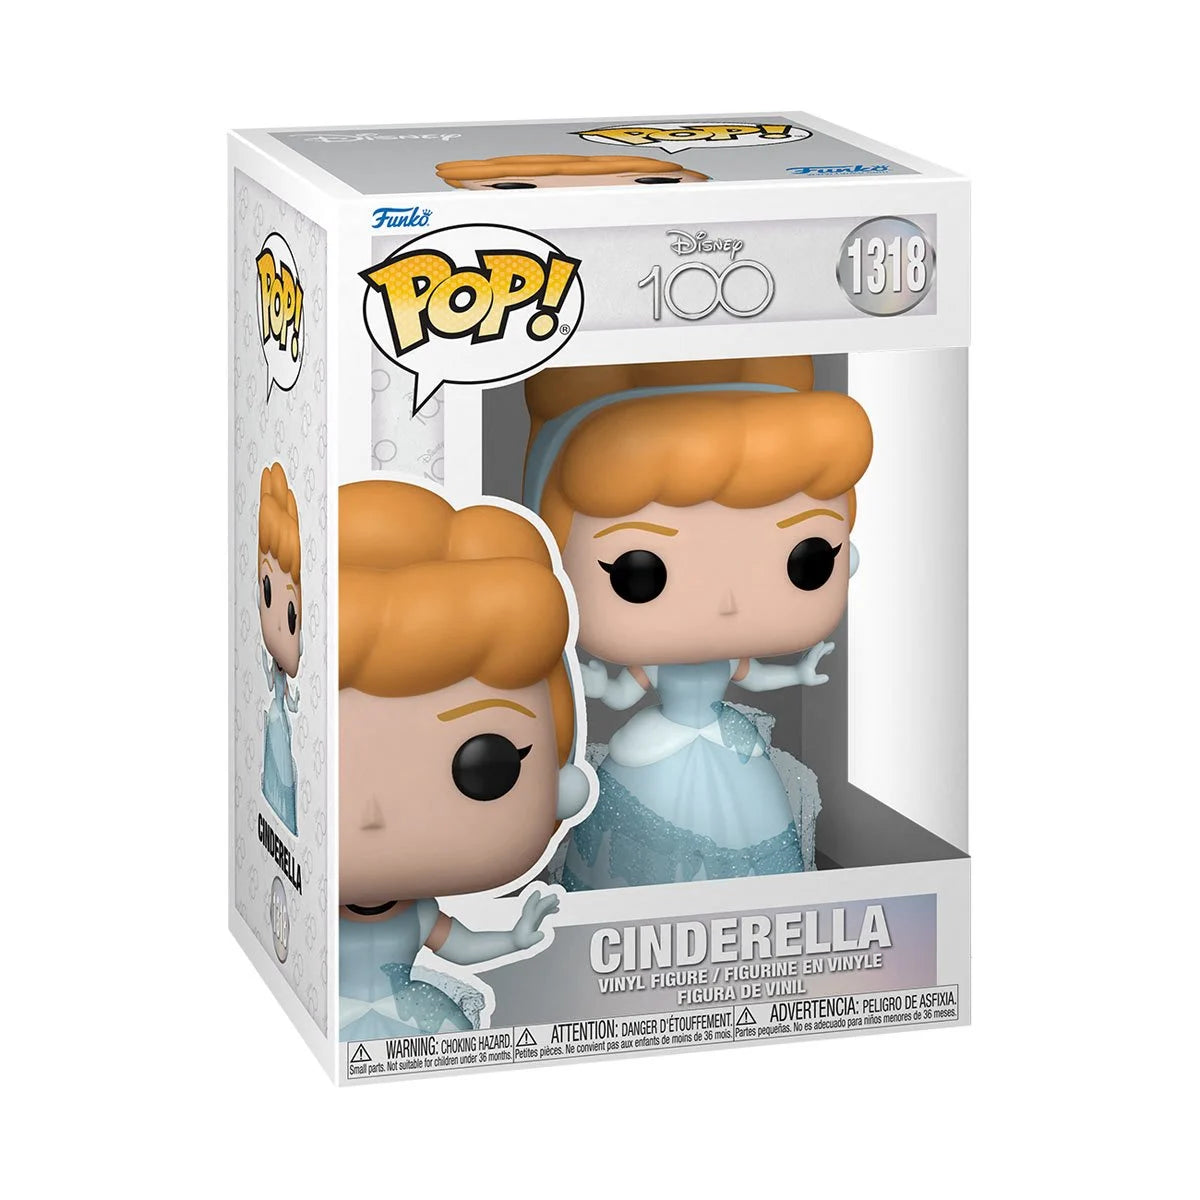 Cinderella Disney 100 Funko Pop! Vinyl Figure